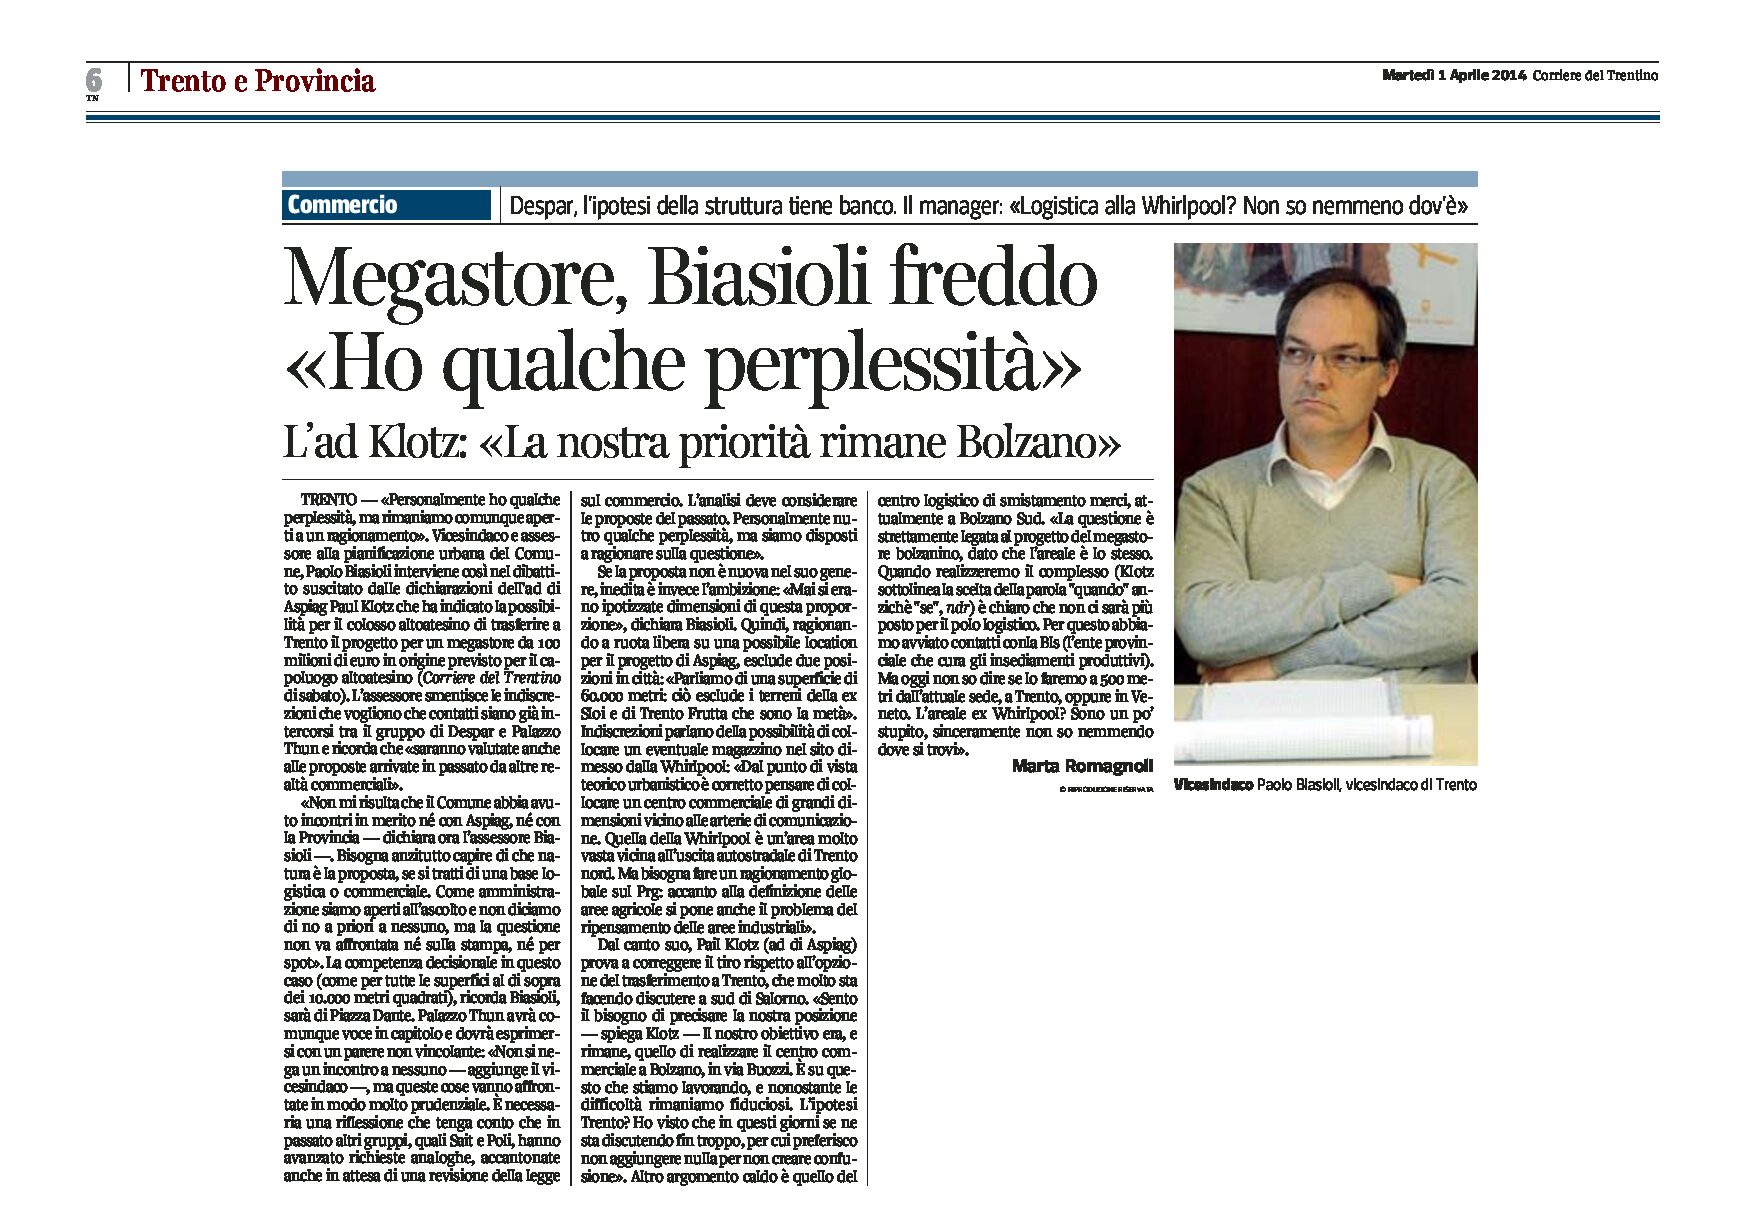 Trento: megastore, Biasioli perplesso.